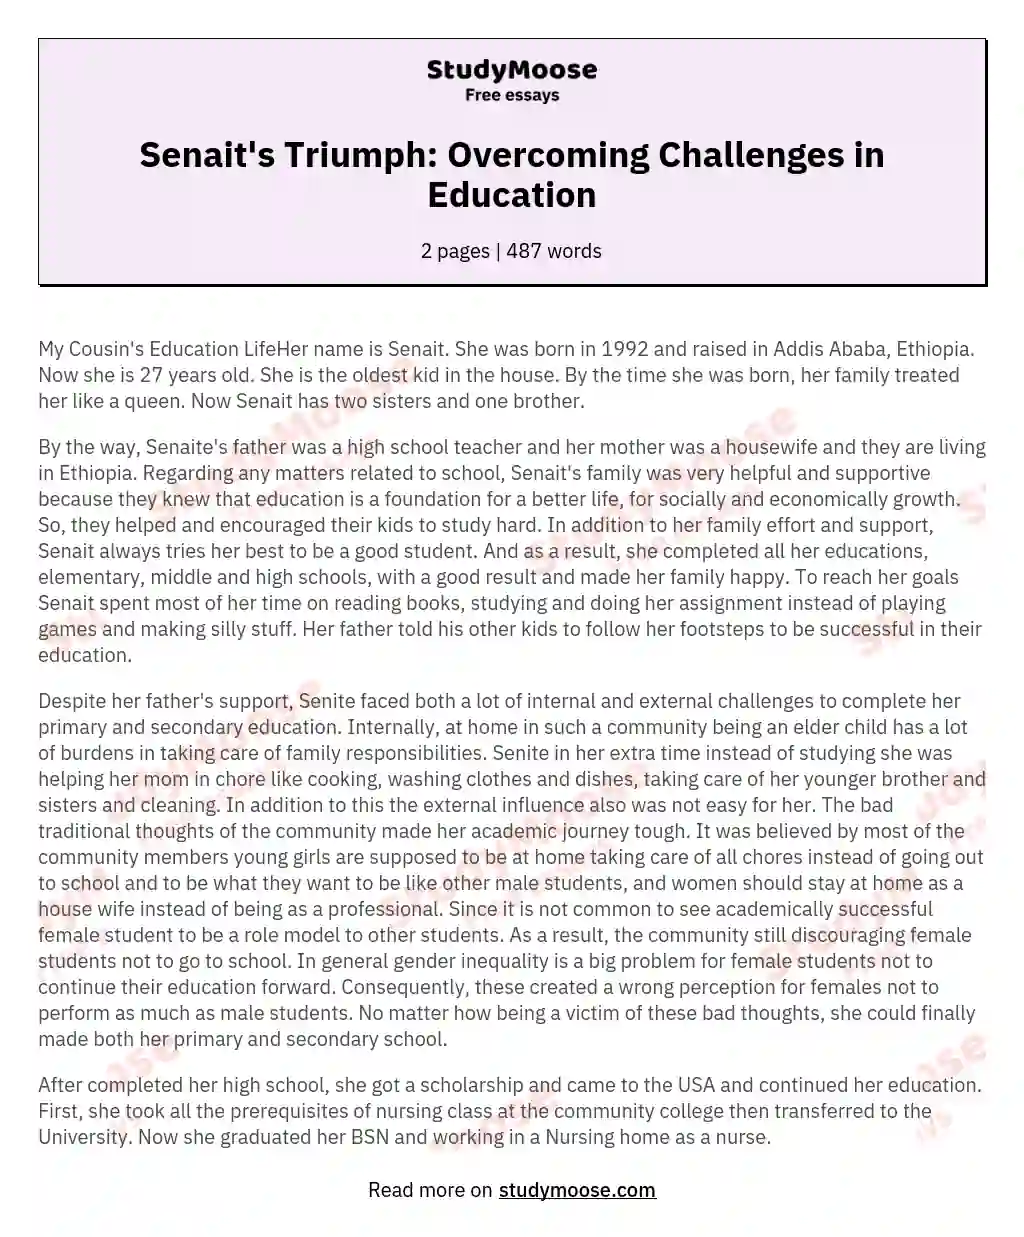 Senait's Triumph: Overcoming Challenges in Education essay